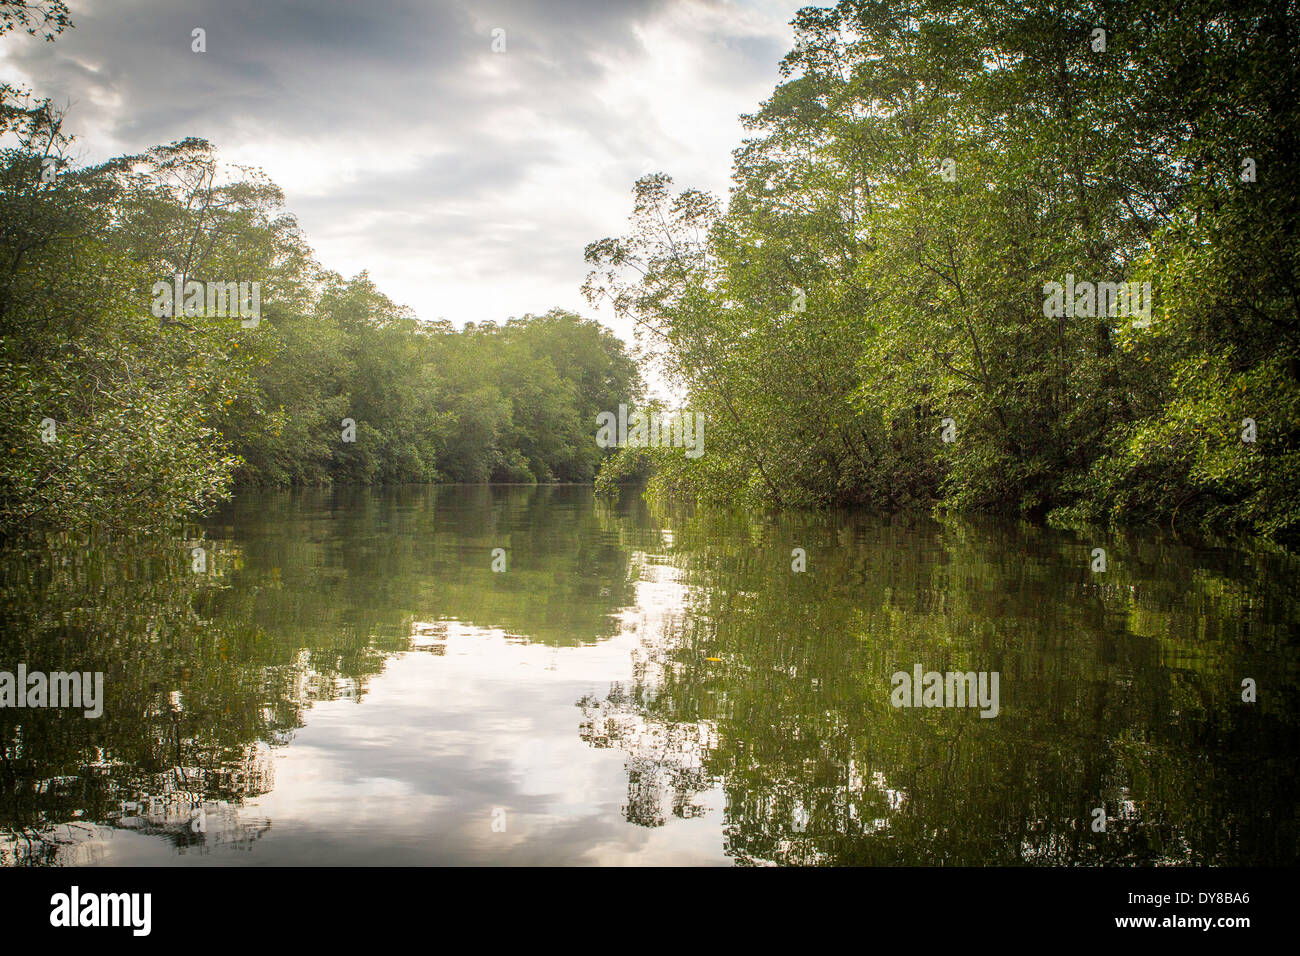 River winding through mangrove forest near Golfo Dulce, Costa Rica Stock Photo